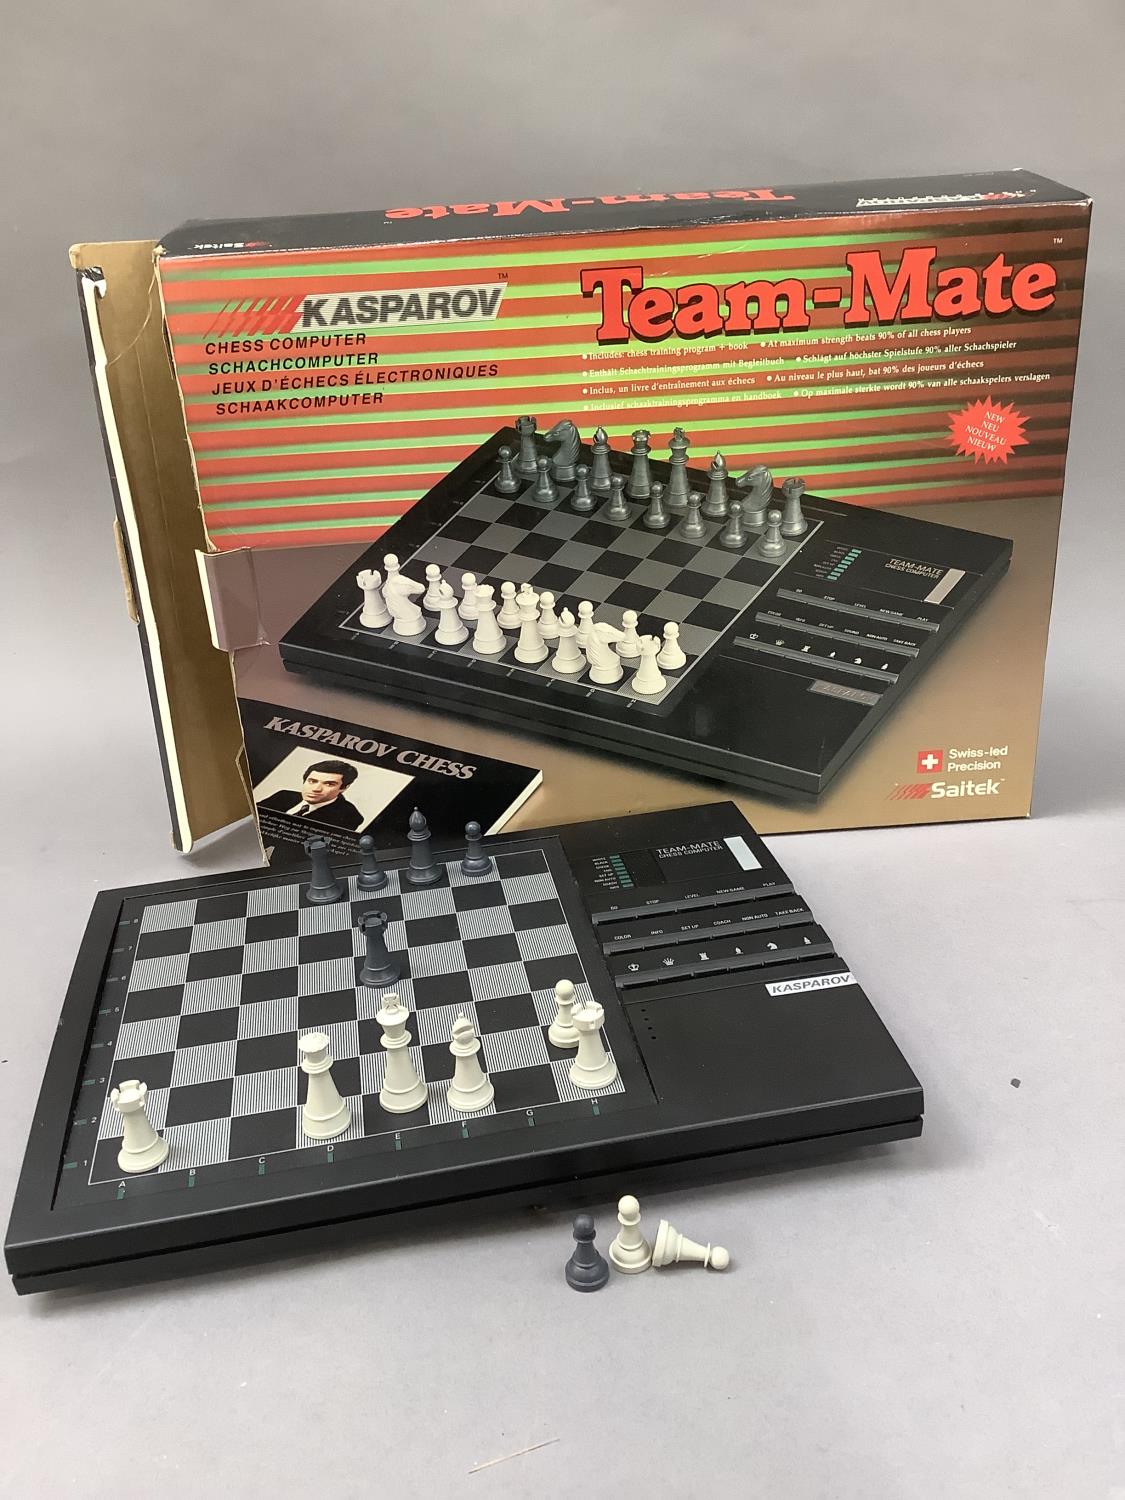 A Team-Mate Kasperov chess computer by Saitek, boxed - Image 3 of 3